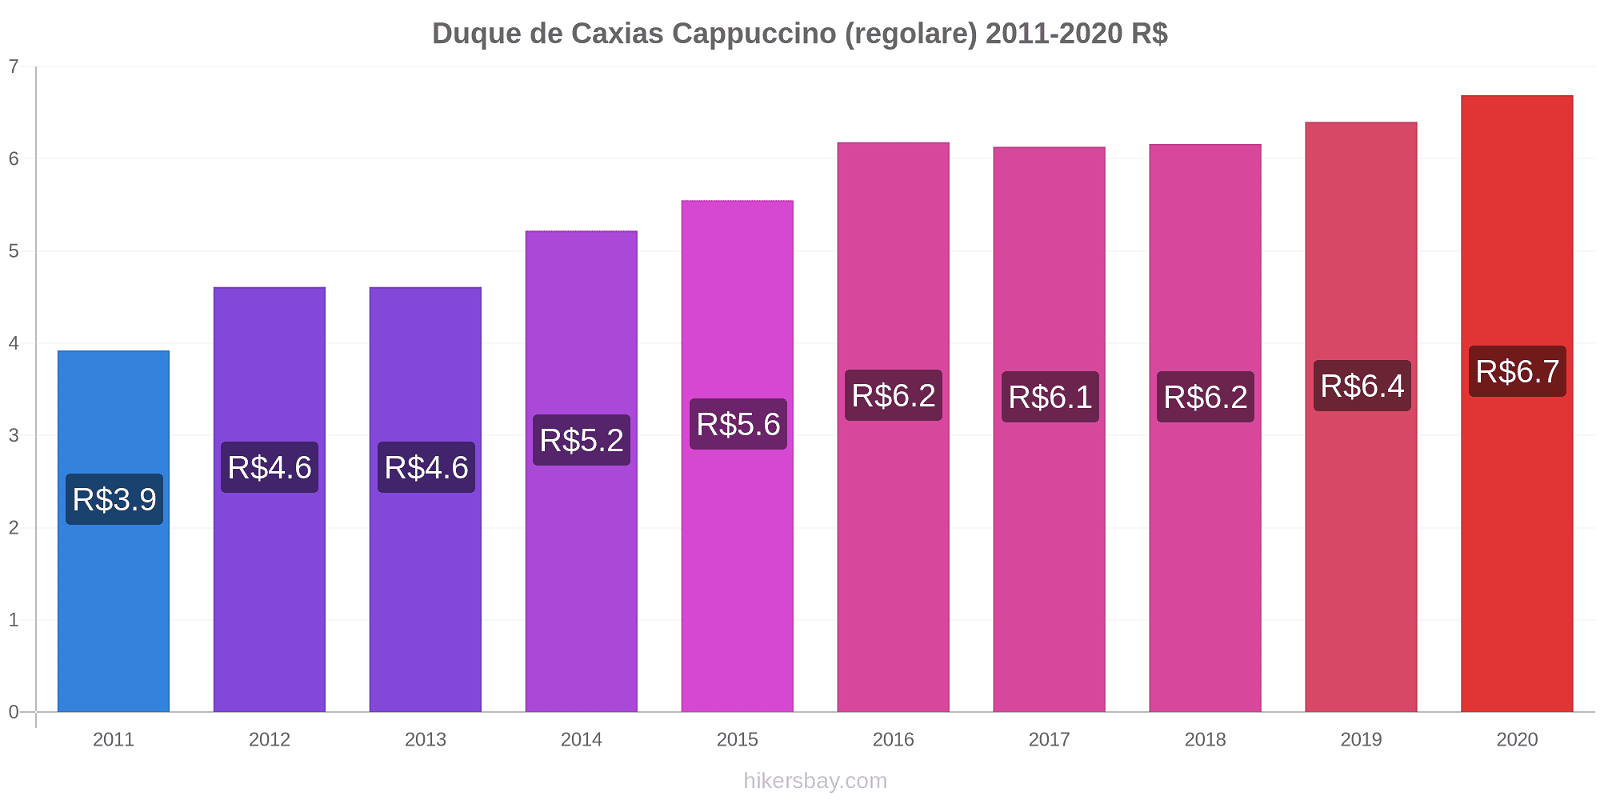 Duque de Caxias variazioni di prezzo Cappuccino (normale) hikersbay.com